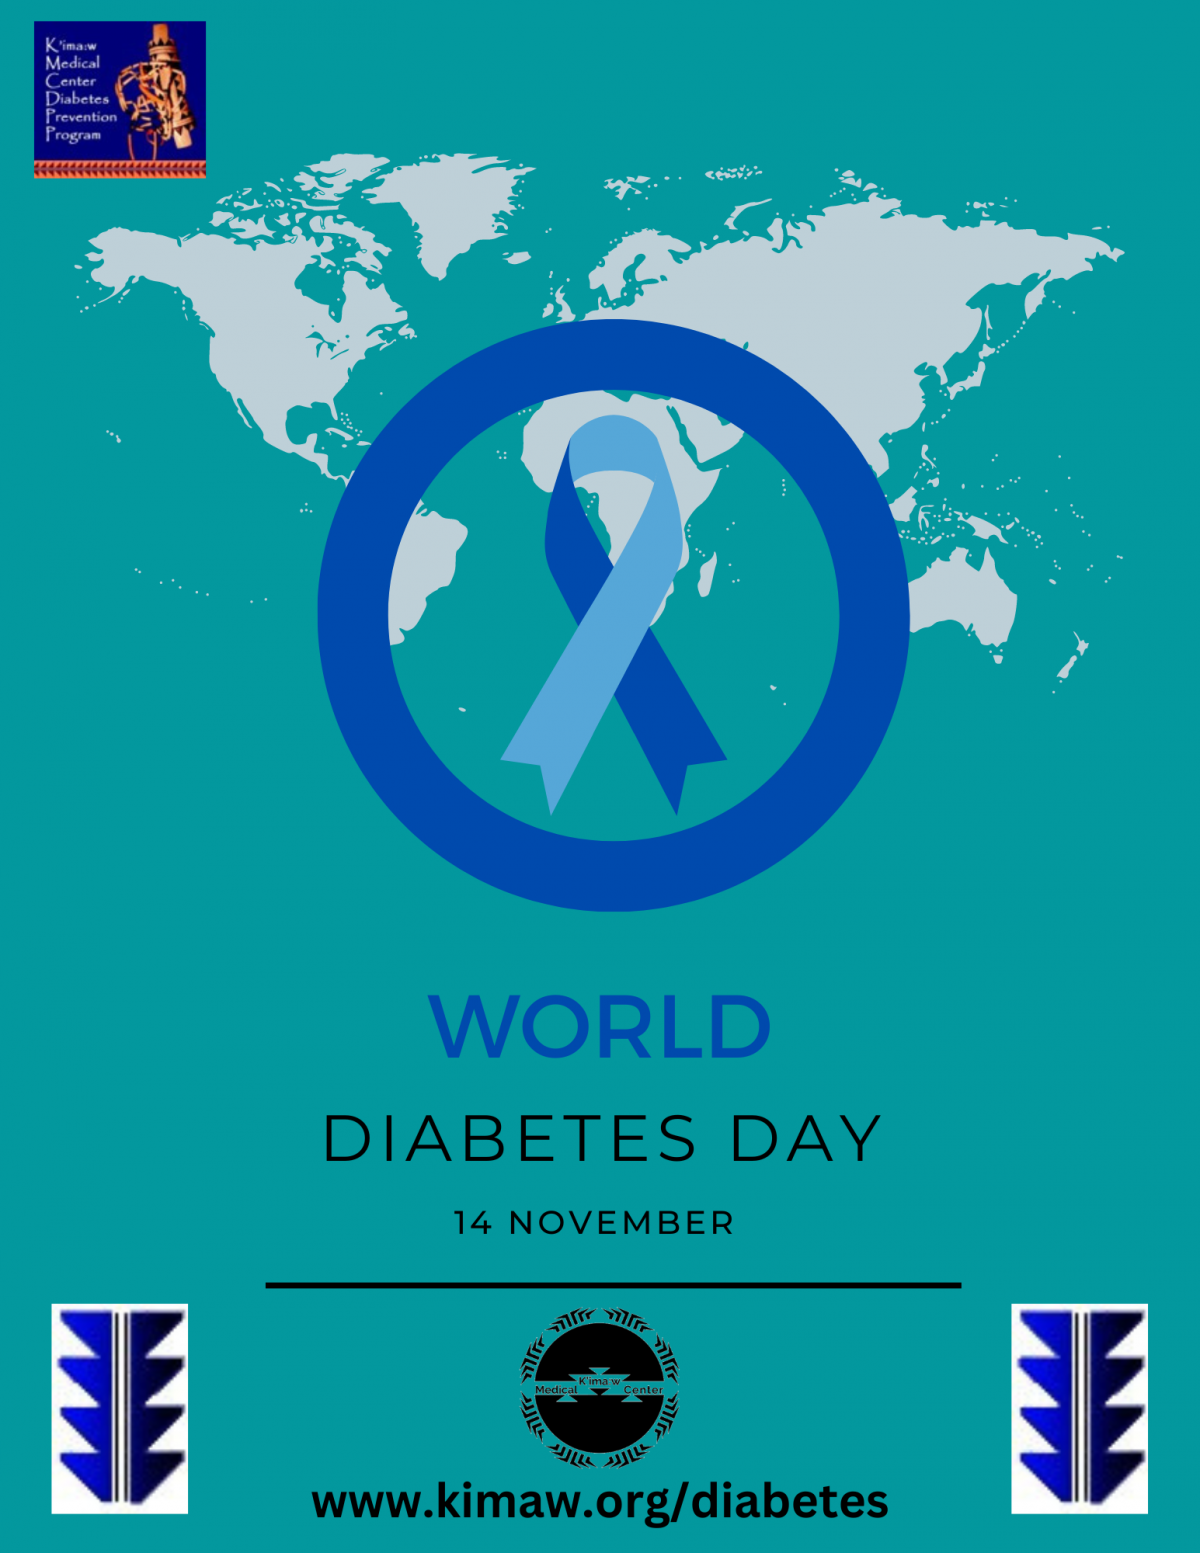 World Diabetes Day: November 14, 2022